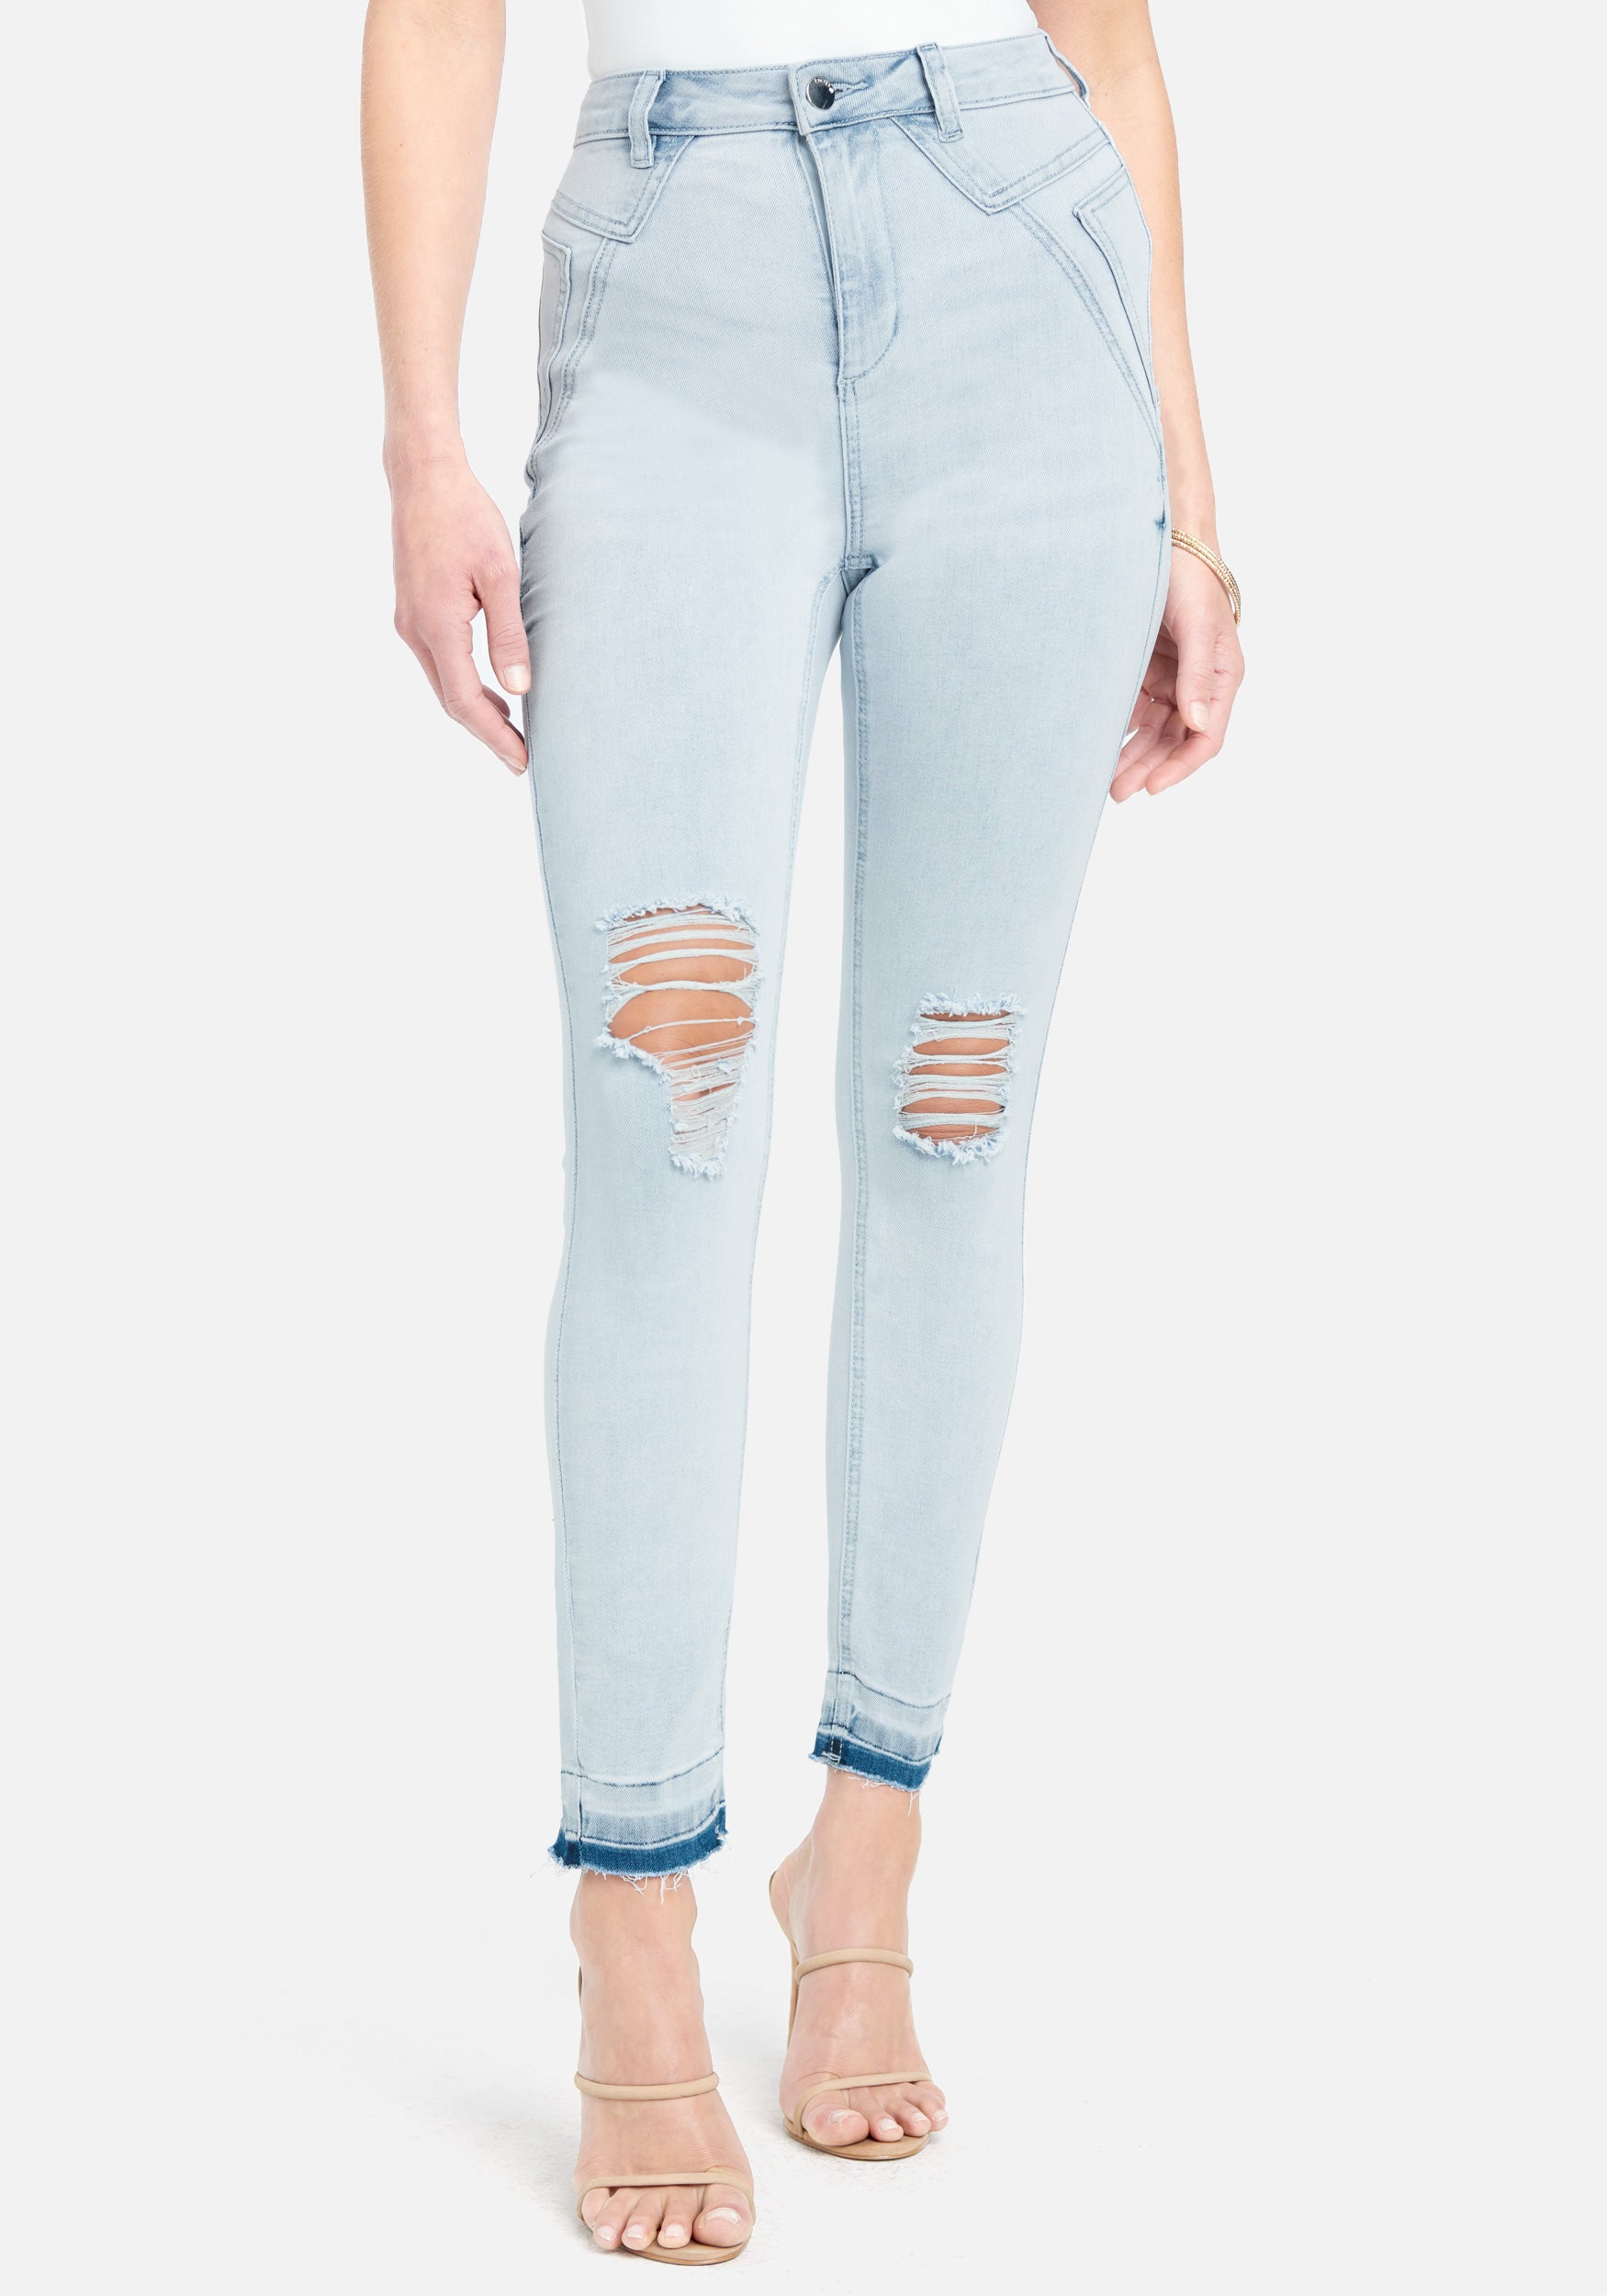 Bebe Women's High Waist Pocket Detail Skinny Jeans, Size 25 in Light Blue Wash Cotton/Spandex